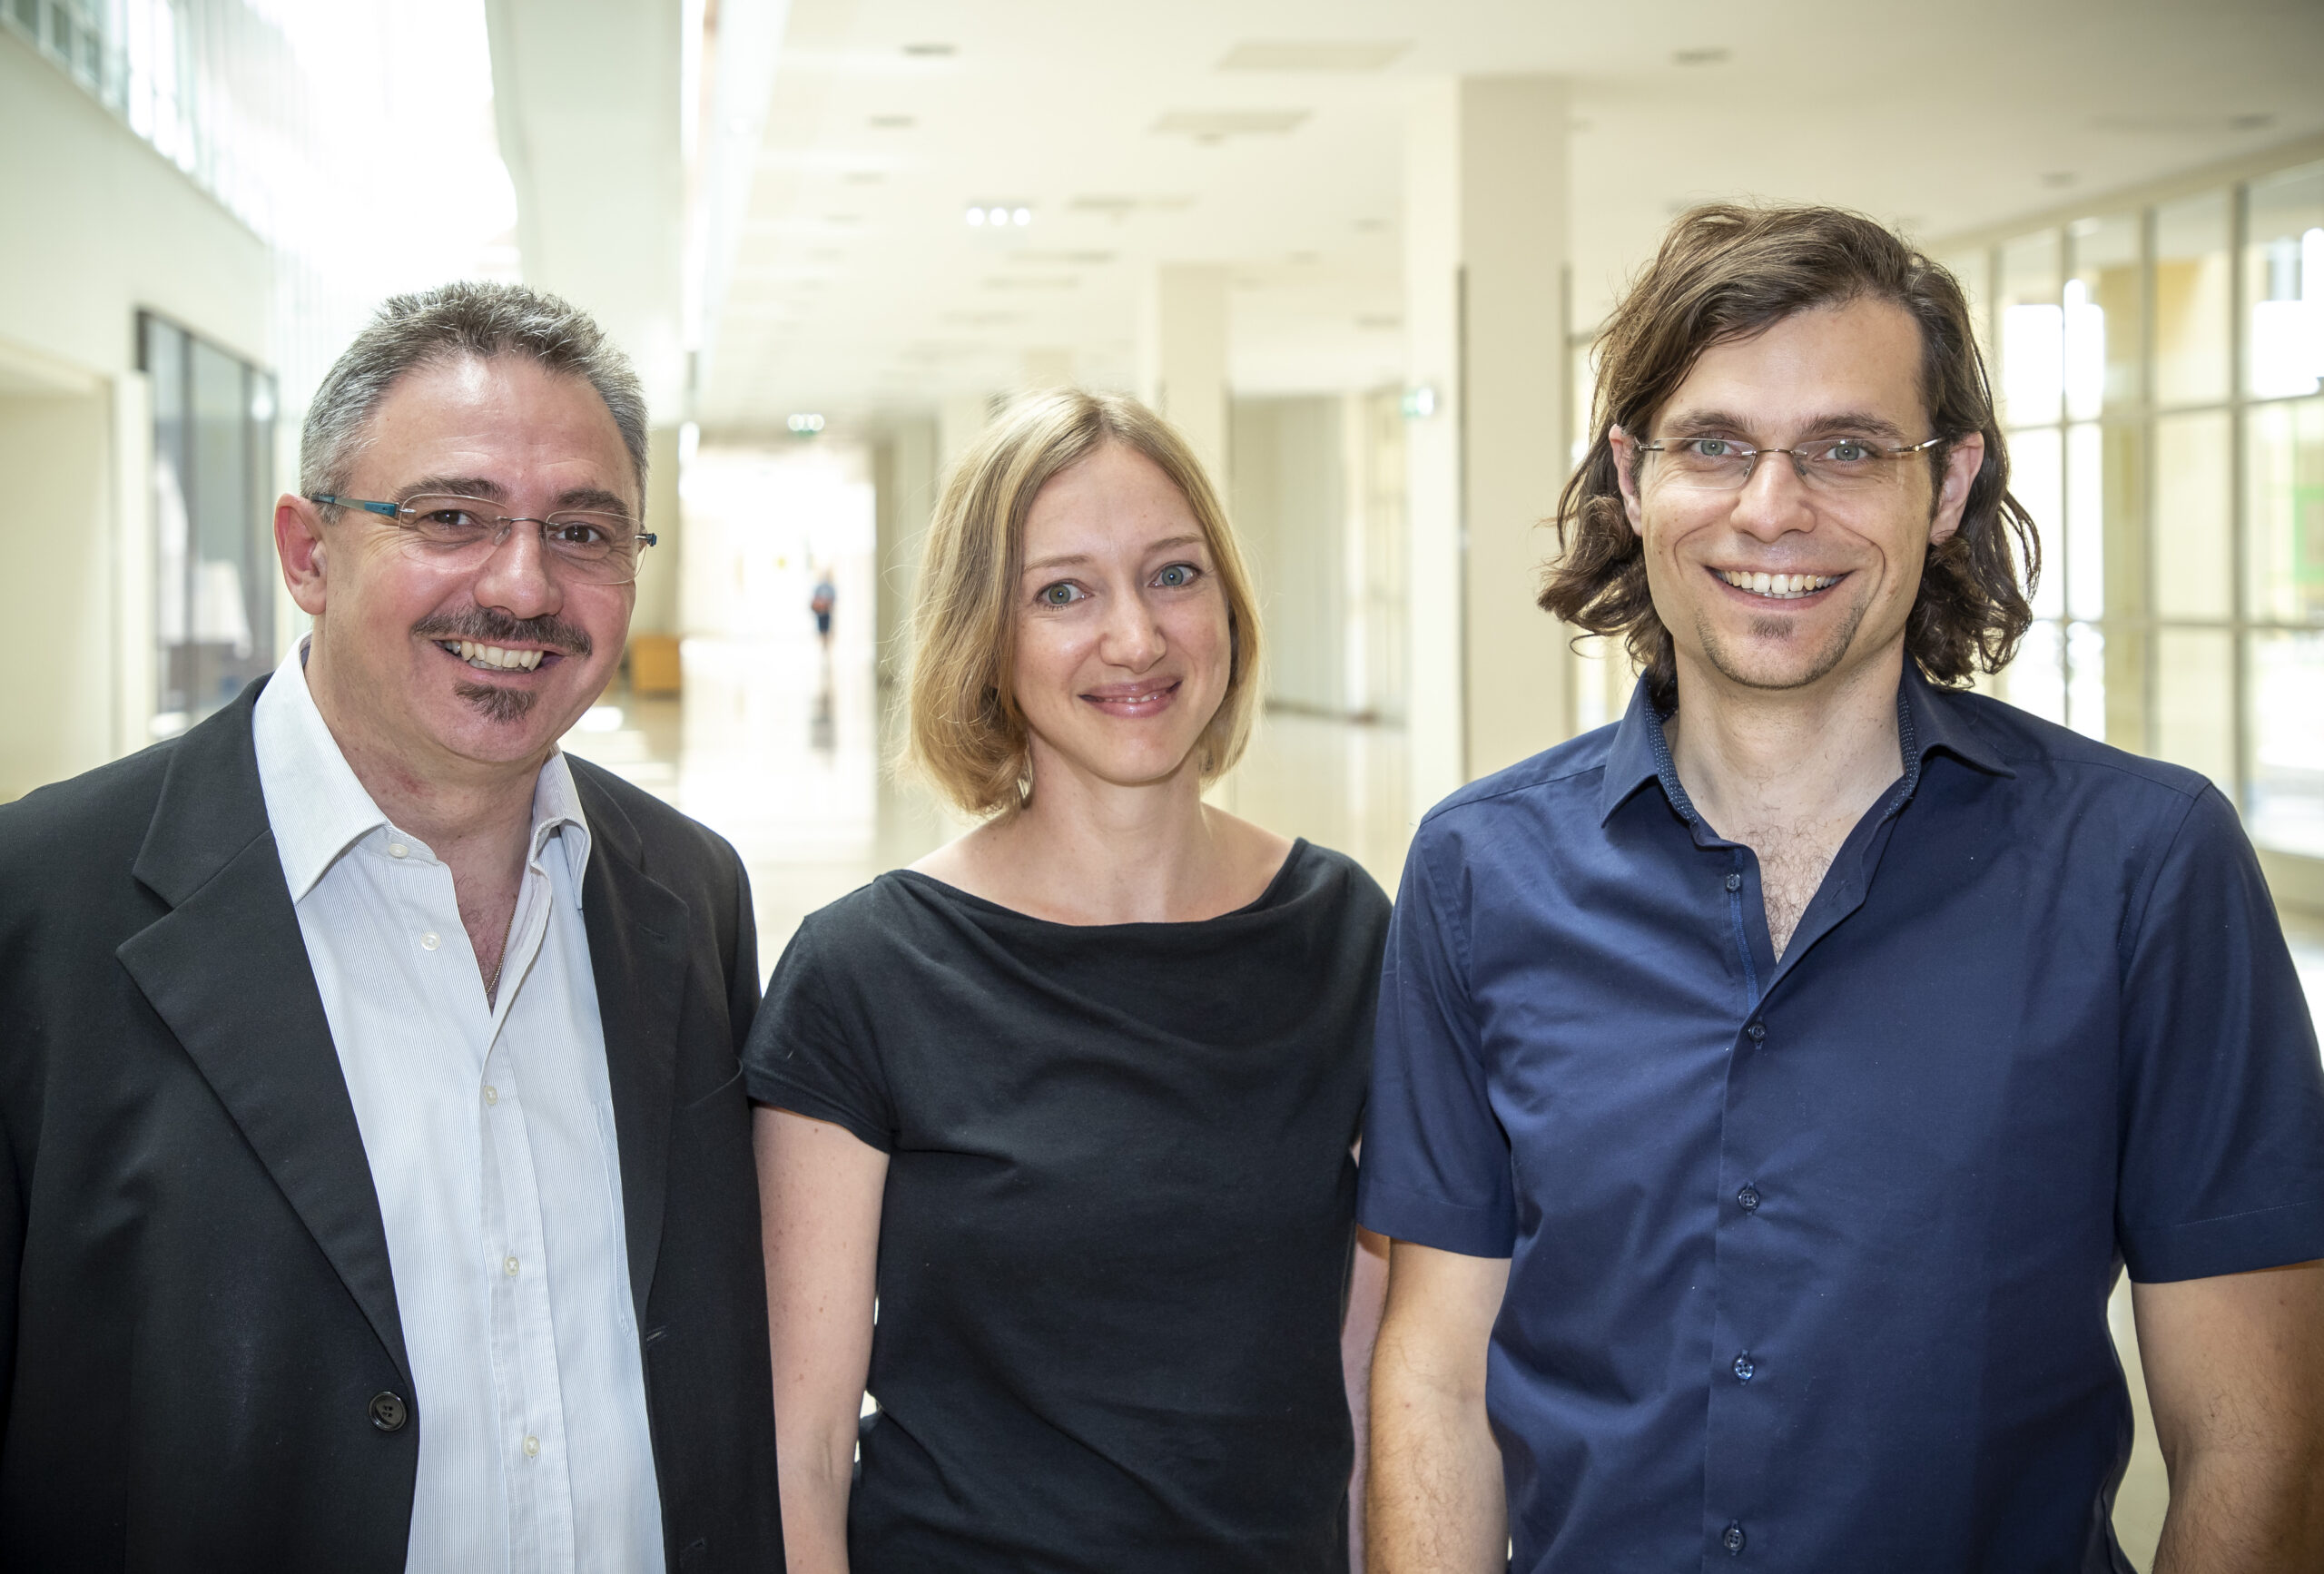 Foto: v.l.n.r. Professor Christian Huber, Dr. Therese Wohlschlager und Dr. Wolfgang Skala. Fotonachweis: Kolarik